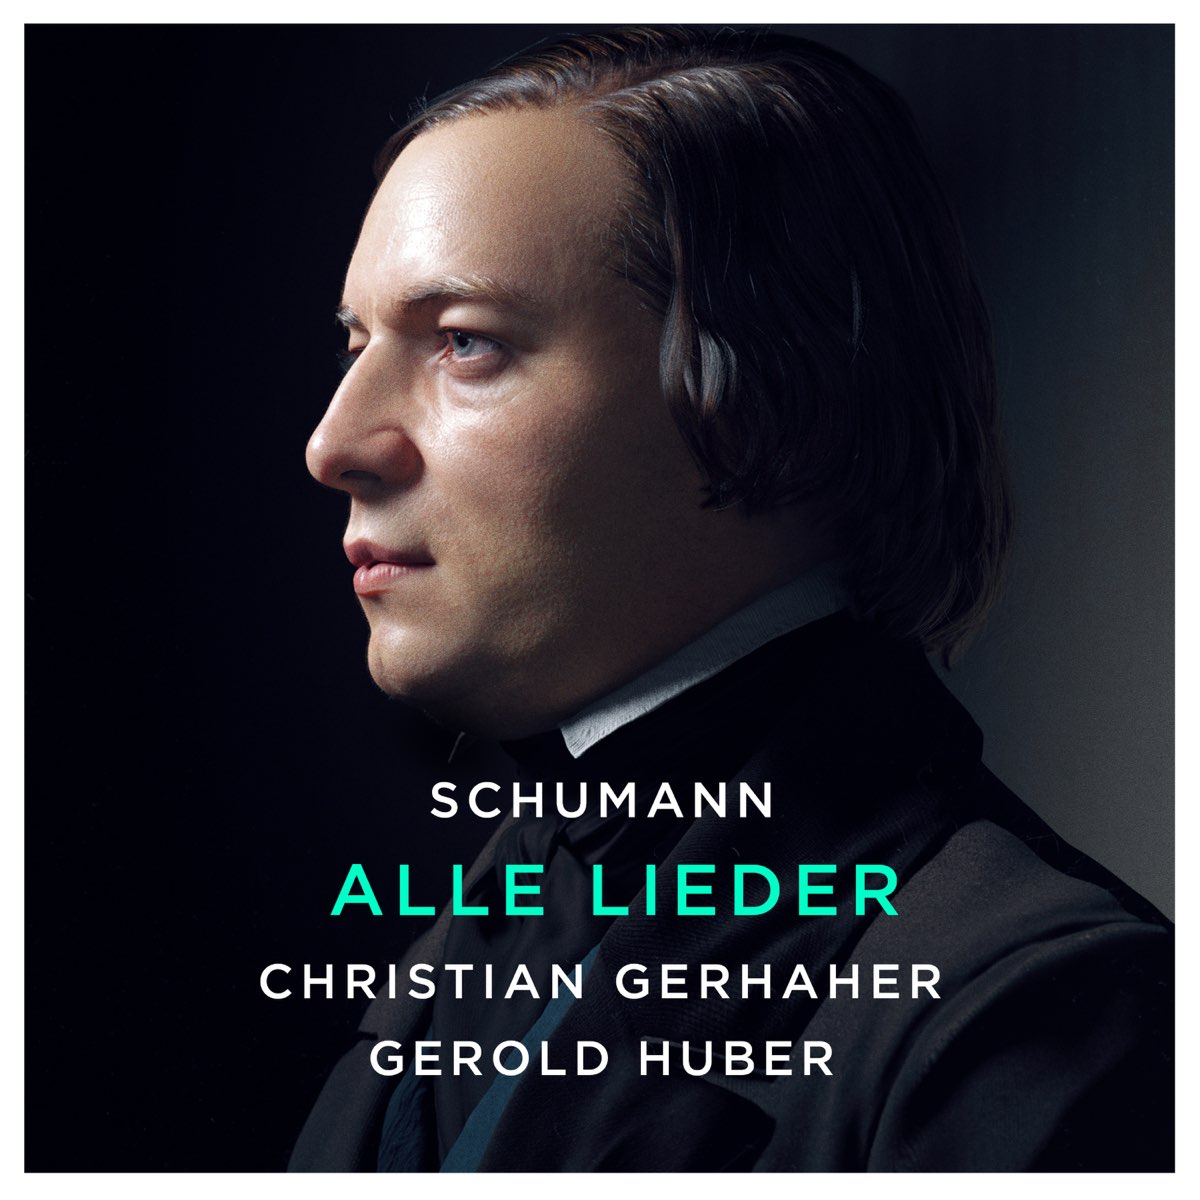 Schumann: Alle Lieder by Christian Gerhaher & Gerold Huber on Apple Music